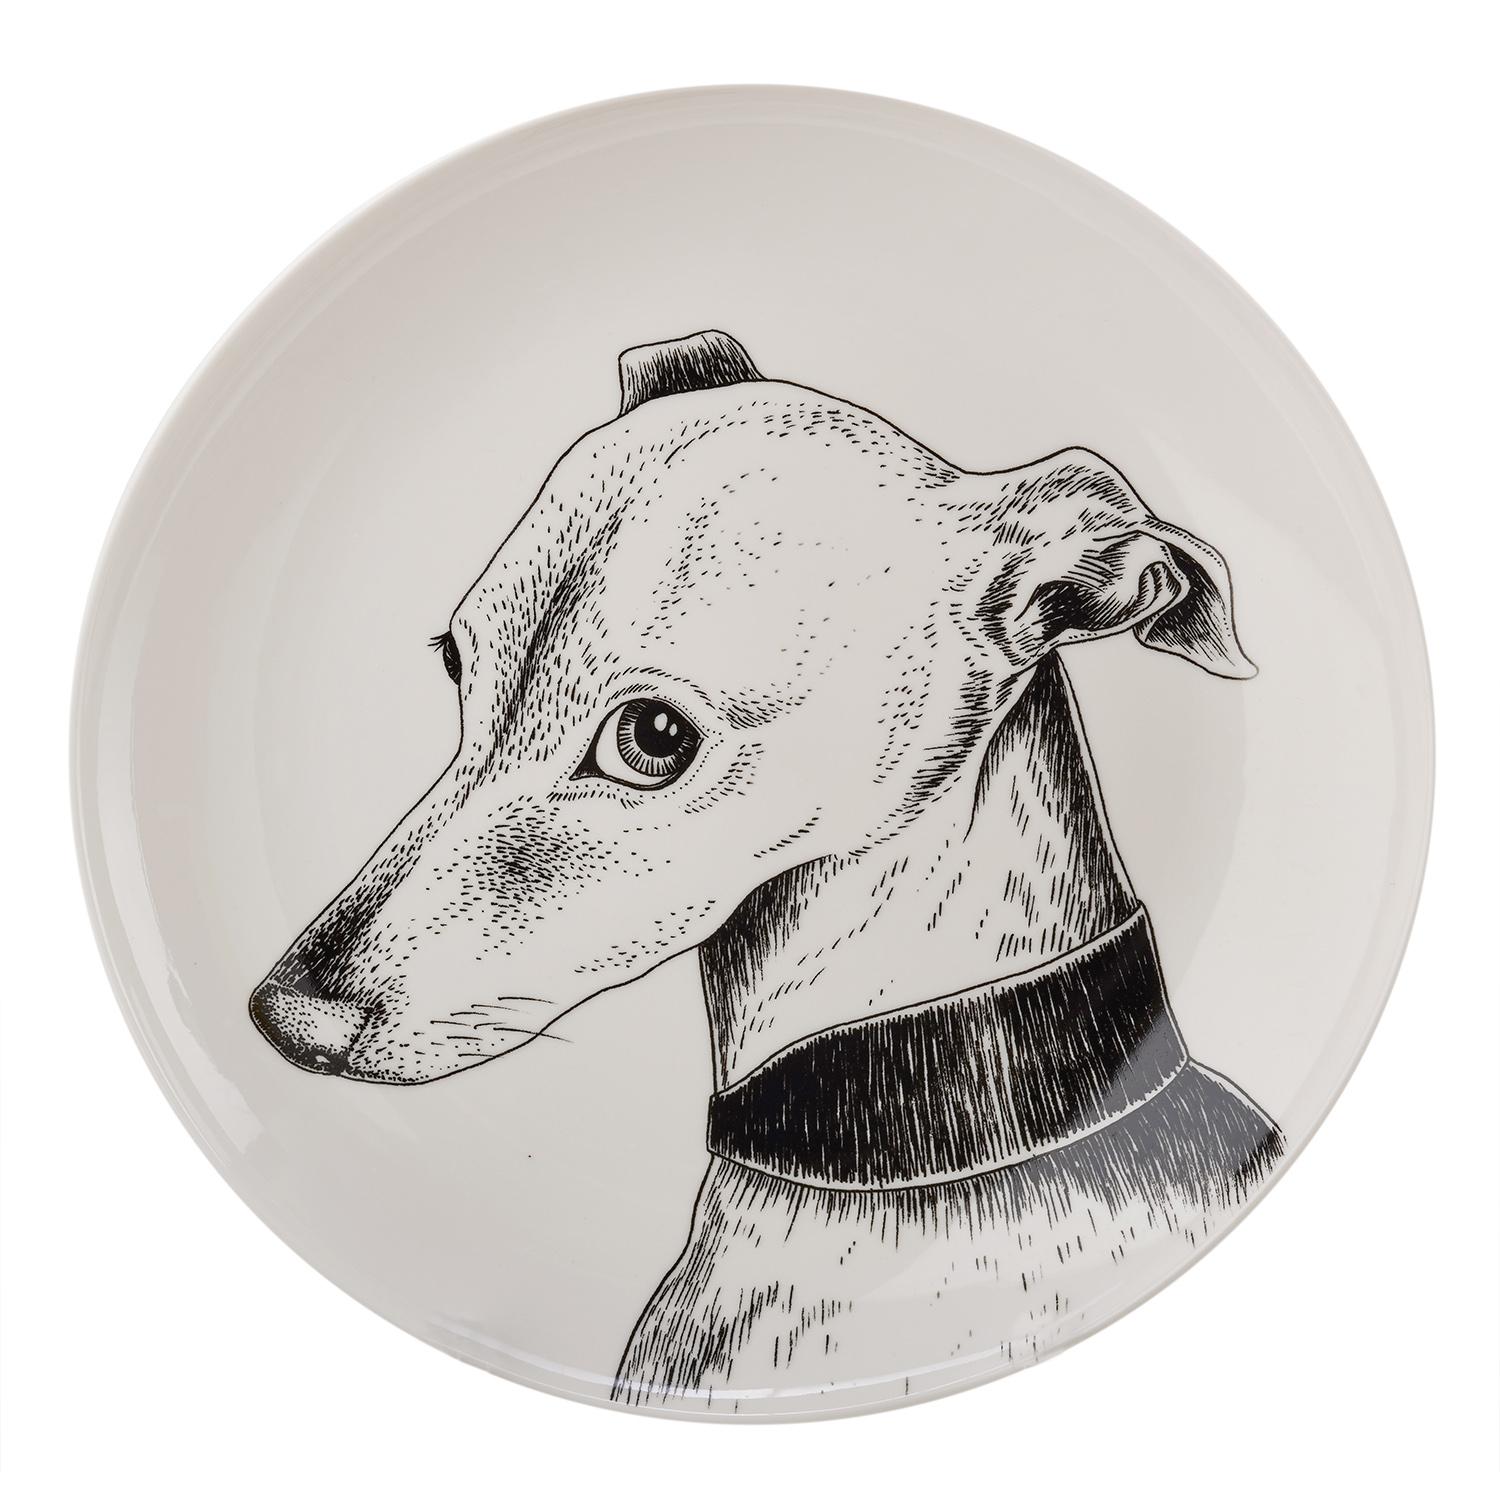 Glazed Porcelain Dinner Plates with Animal Portrait Decals